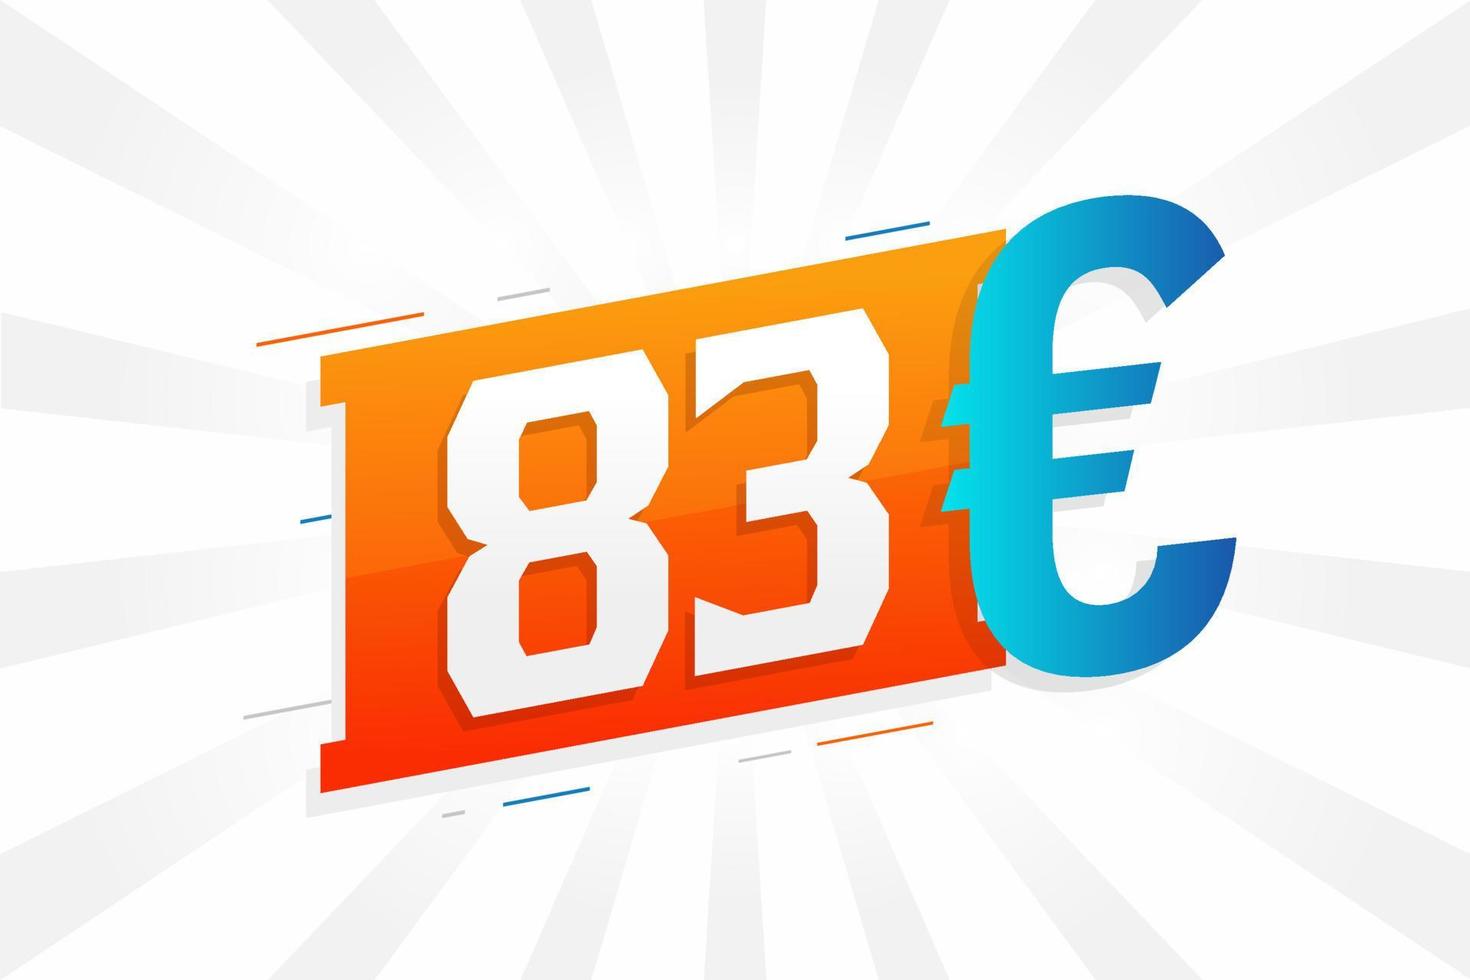 83 euro valuta vektor text symbol. 83 euro europeisk union pengar stock vektor